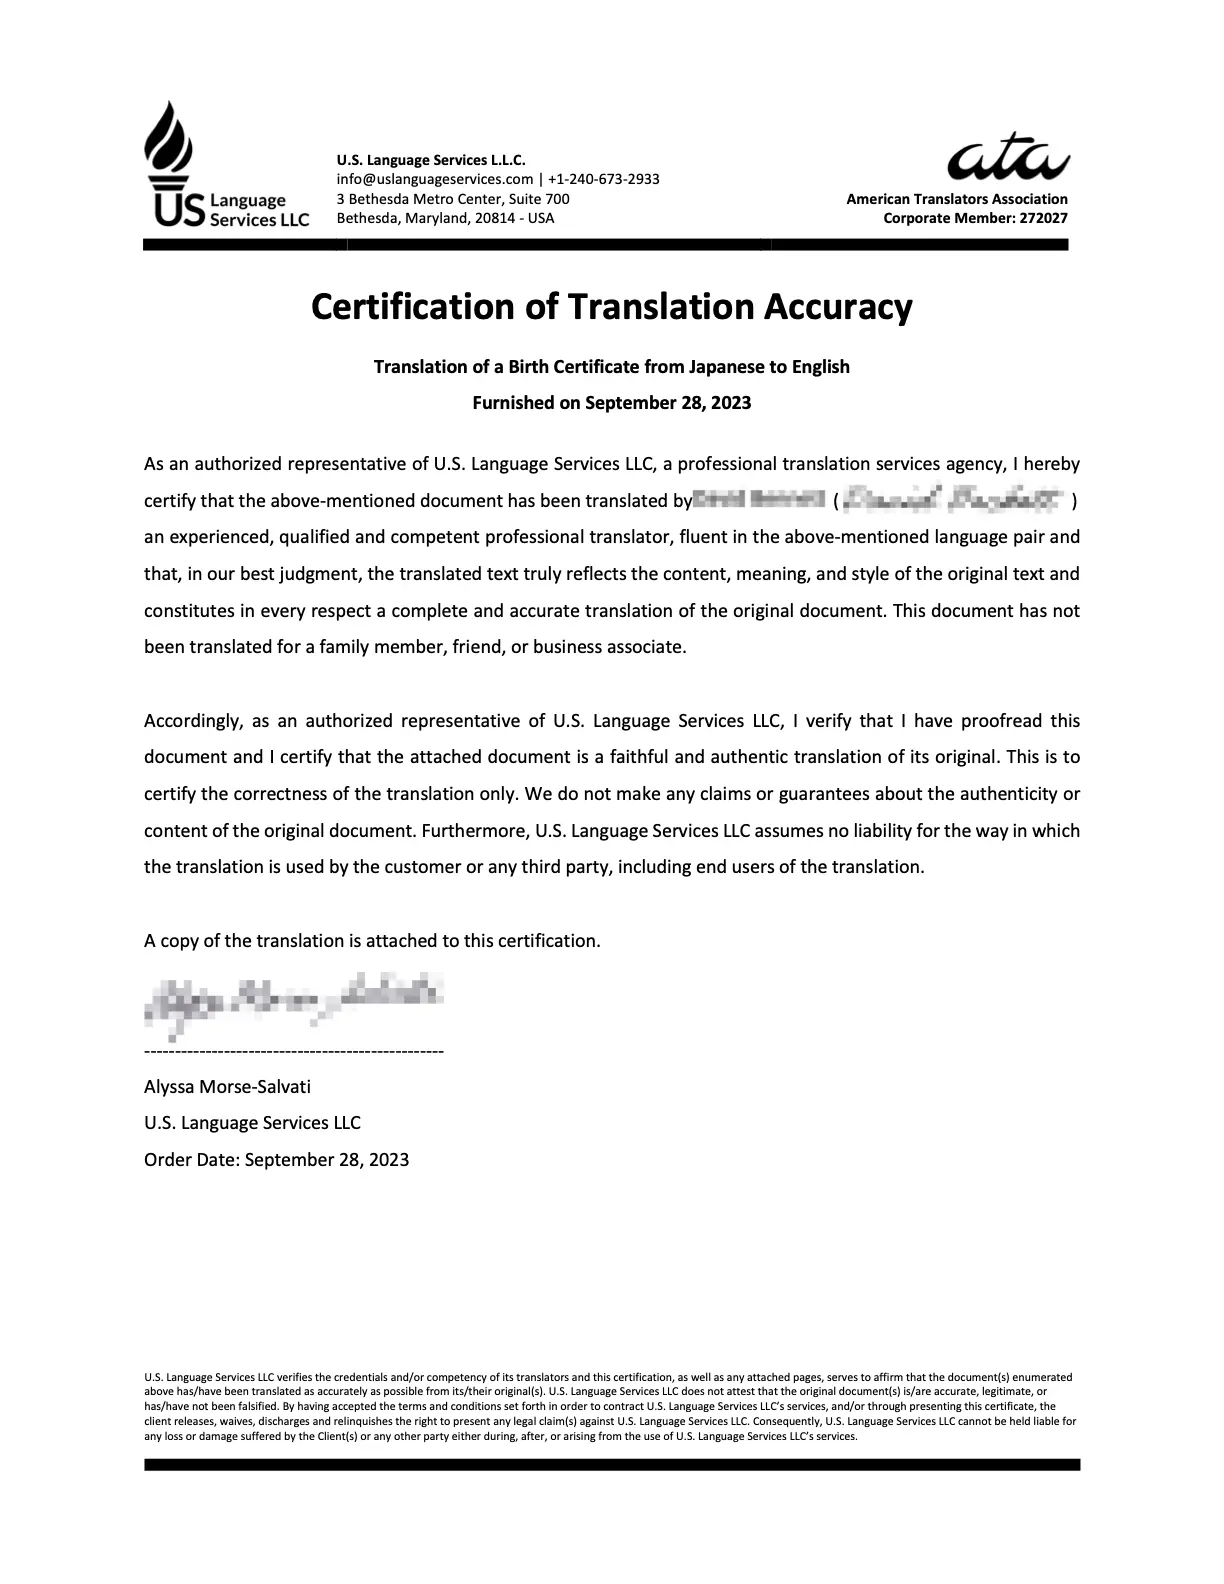 Certified Japanese to English translation - Certificate Sample